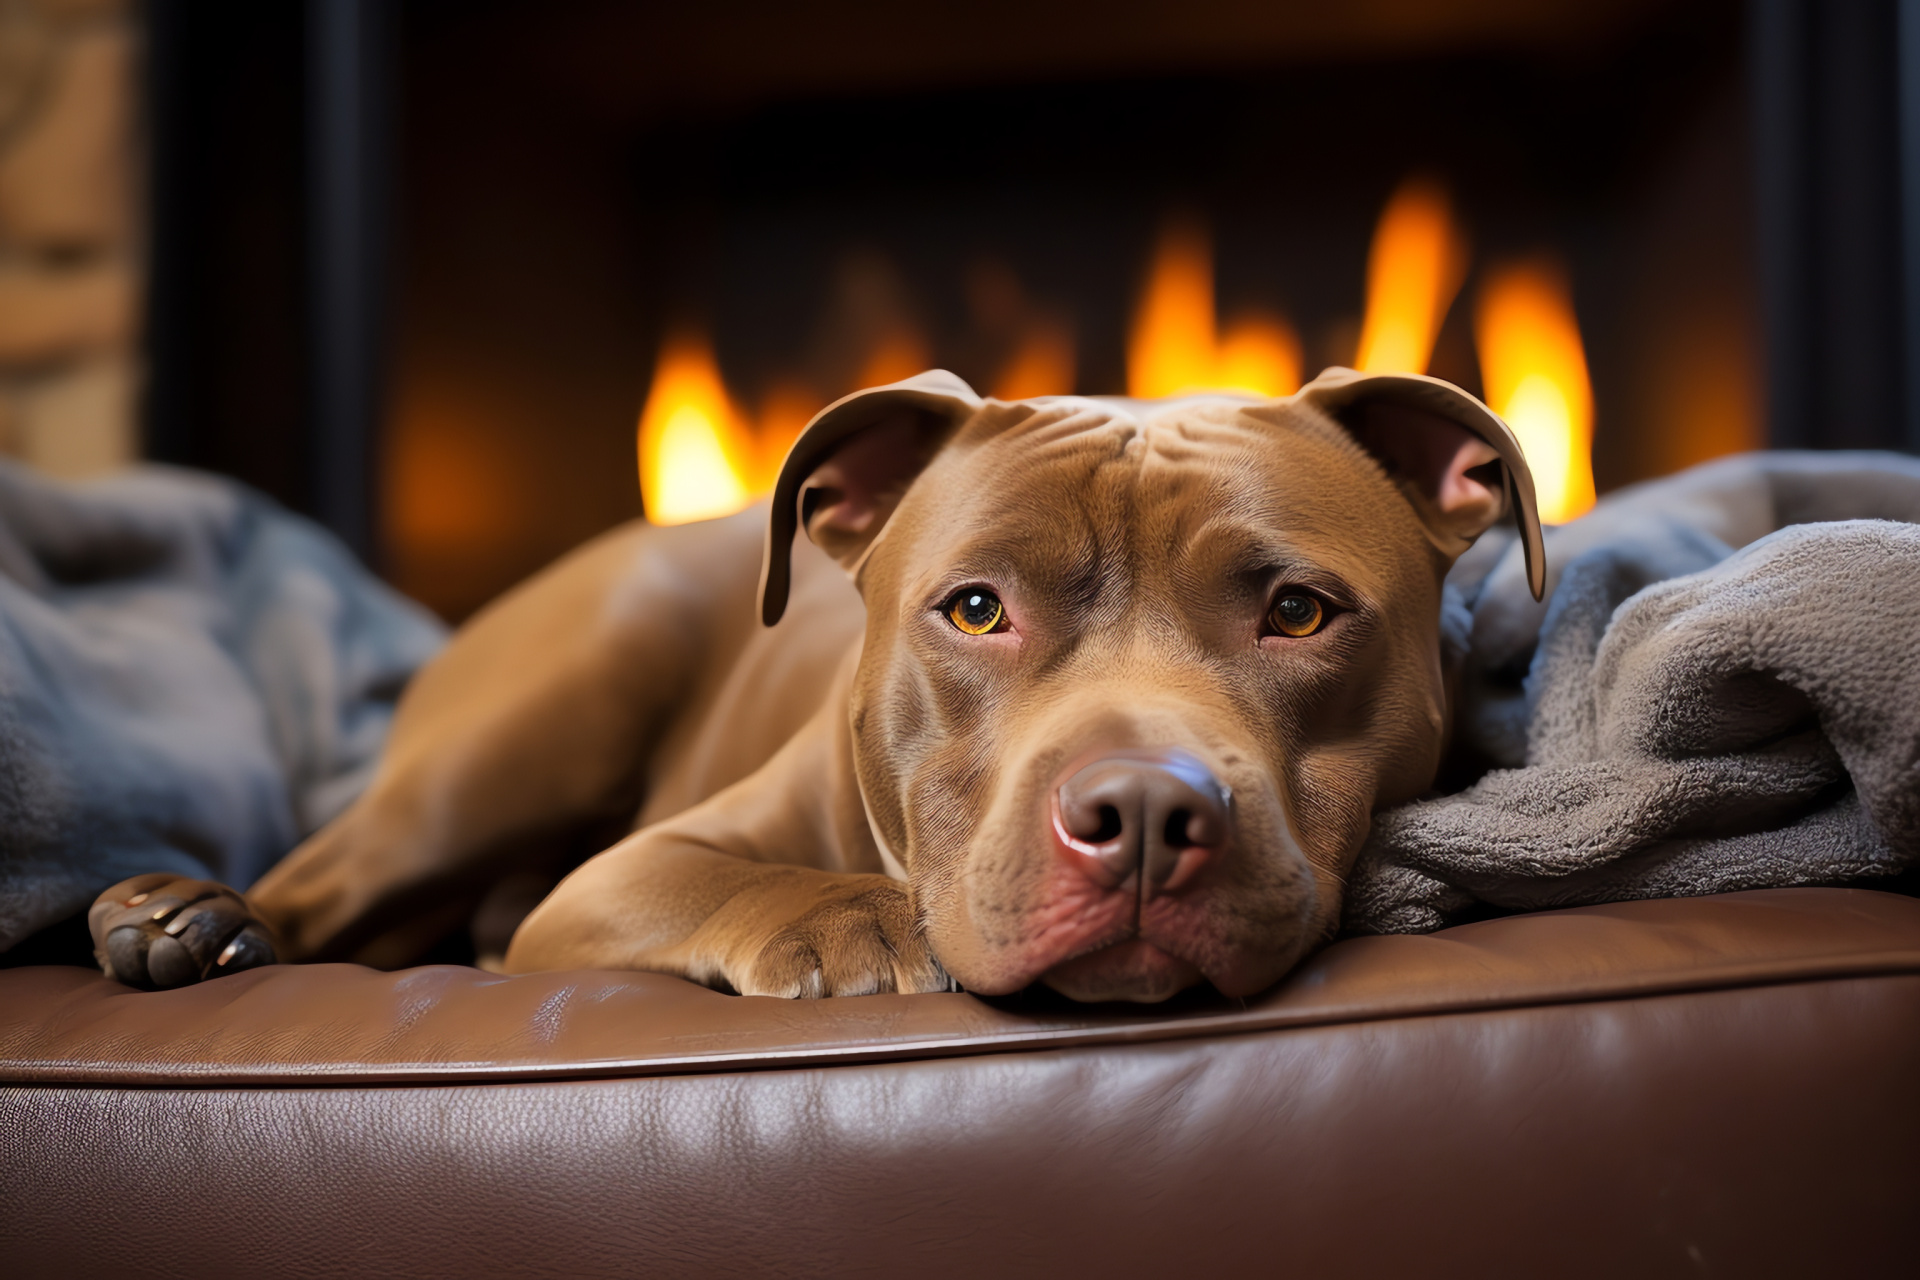 Relaxed Pitbull, Comfortable pet, Chocolate coat dog, Home lounge setting, Warm pet environment, HD Desktop Image